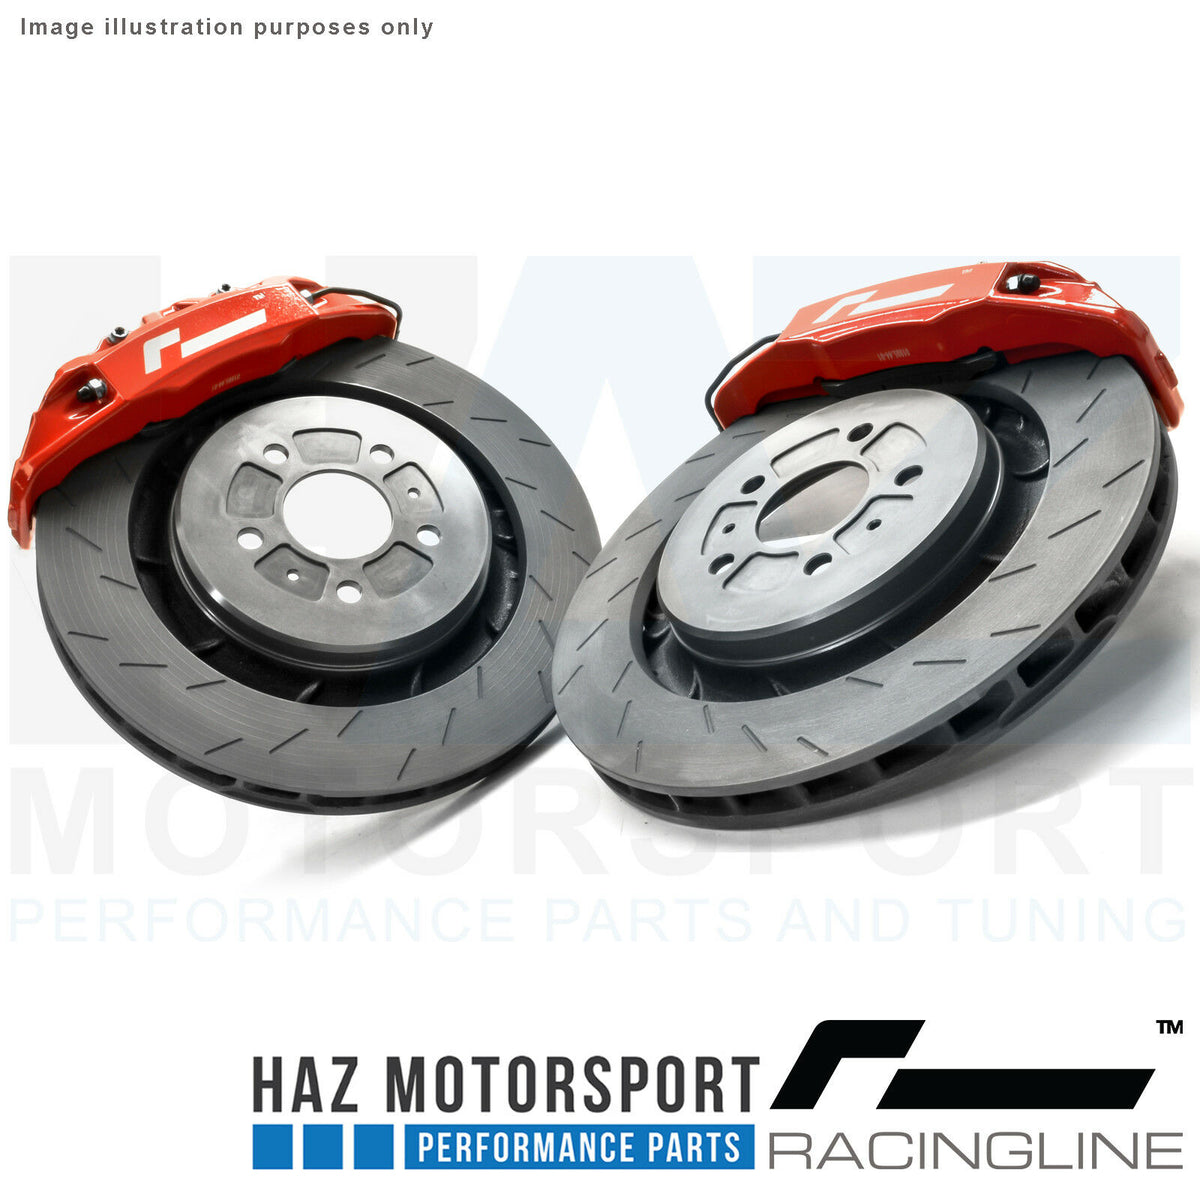 RacingLine Big Brake Upgrade Kit - HAZ MOTORSPORT